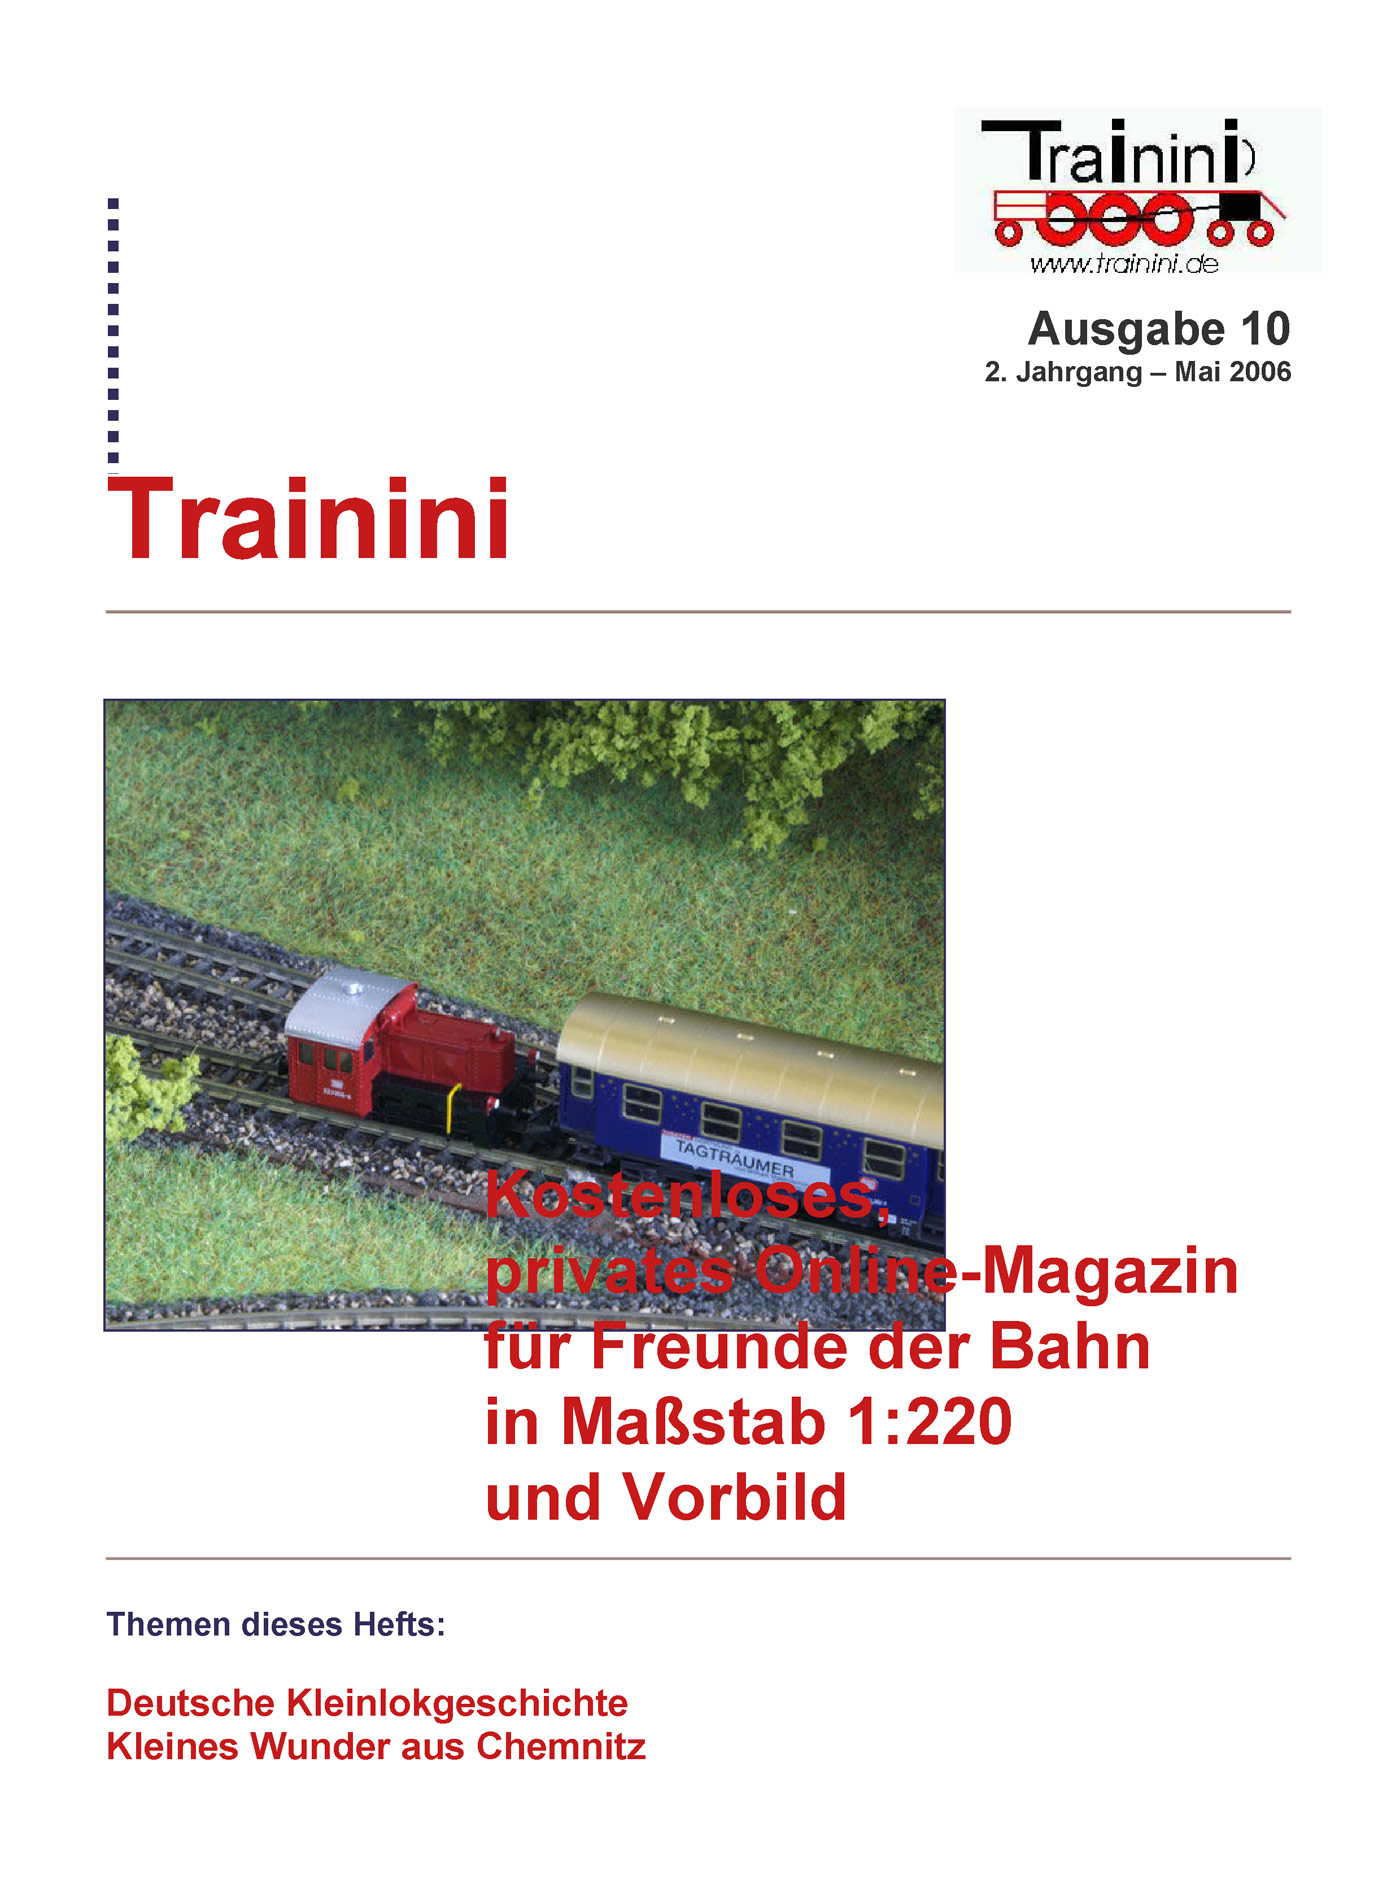 Trainini Ausgabe Mai 2006